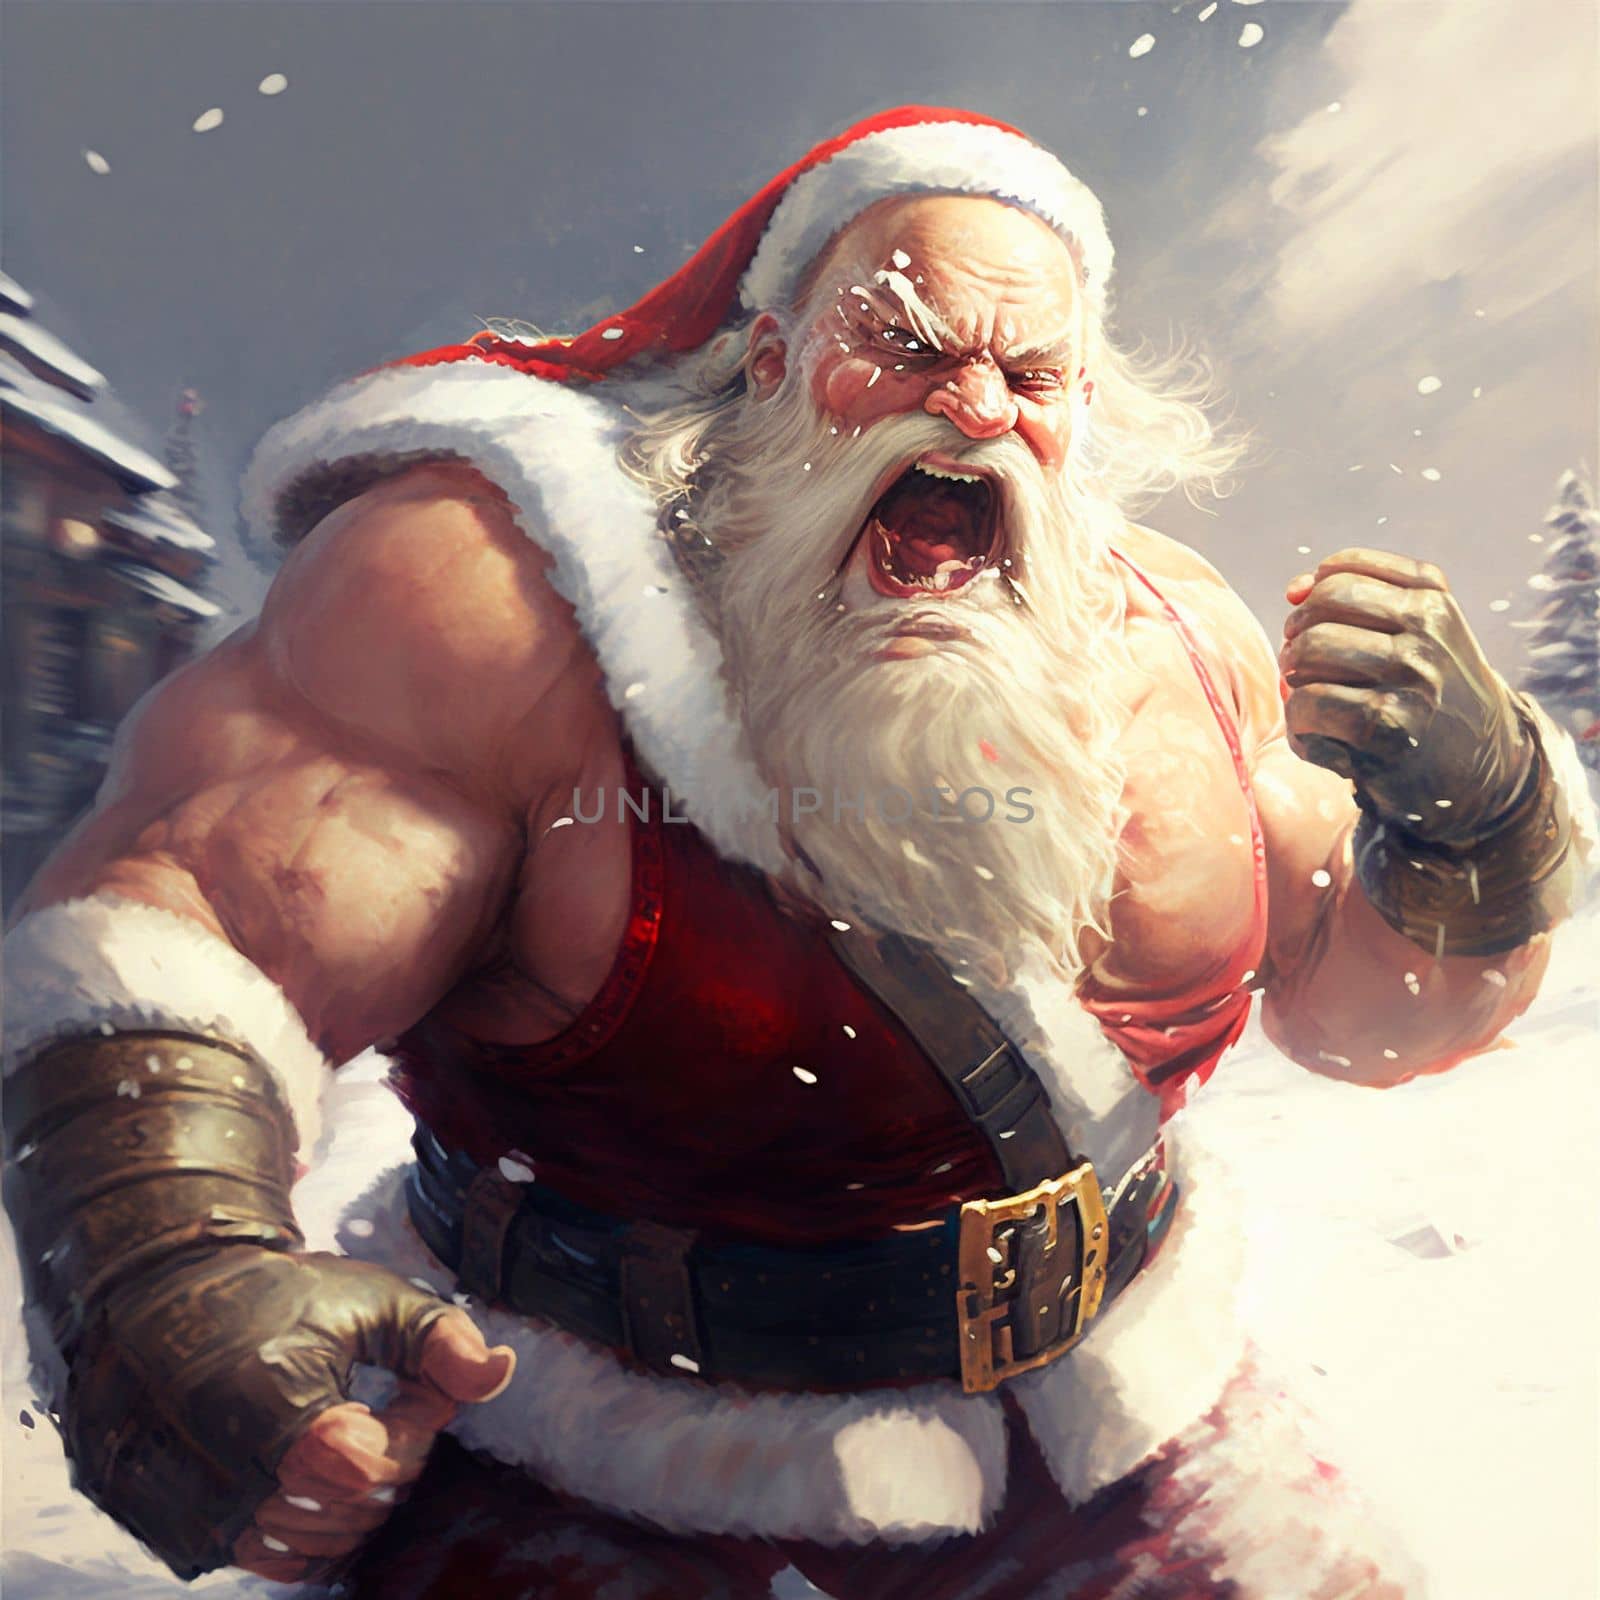 Angry Santa. High quality illustration